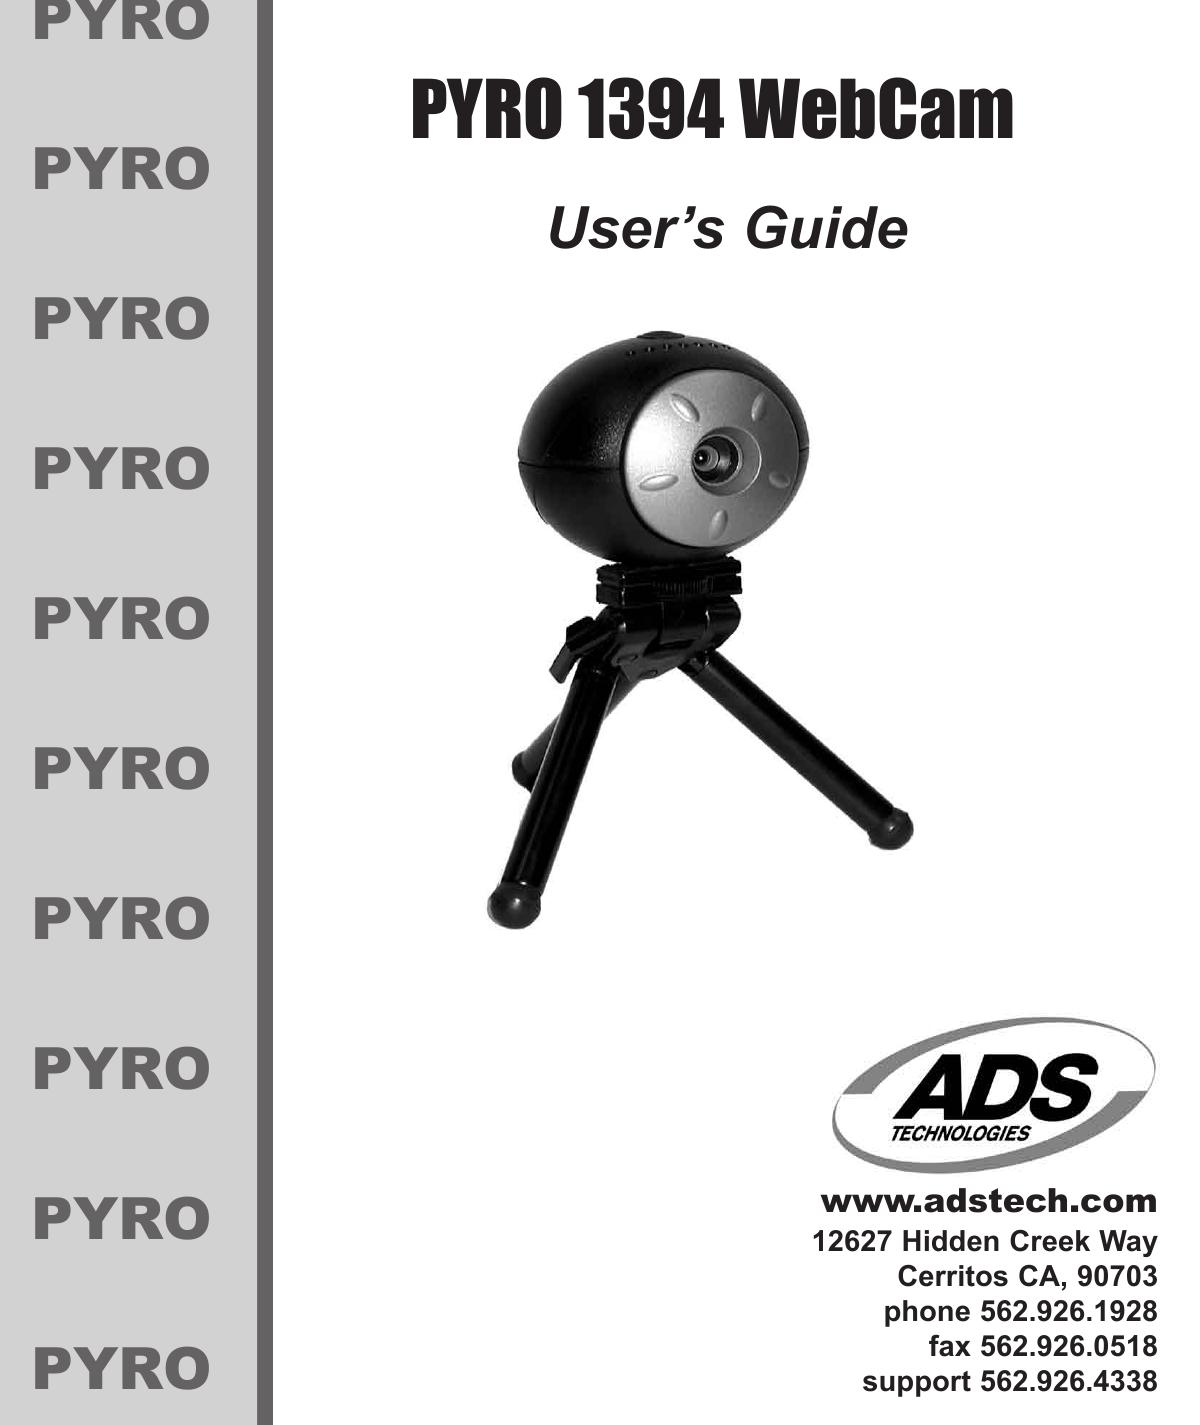 ADS Technologies PYRO 1394 Digital Camera User Manual